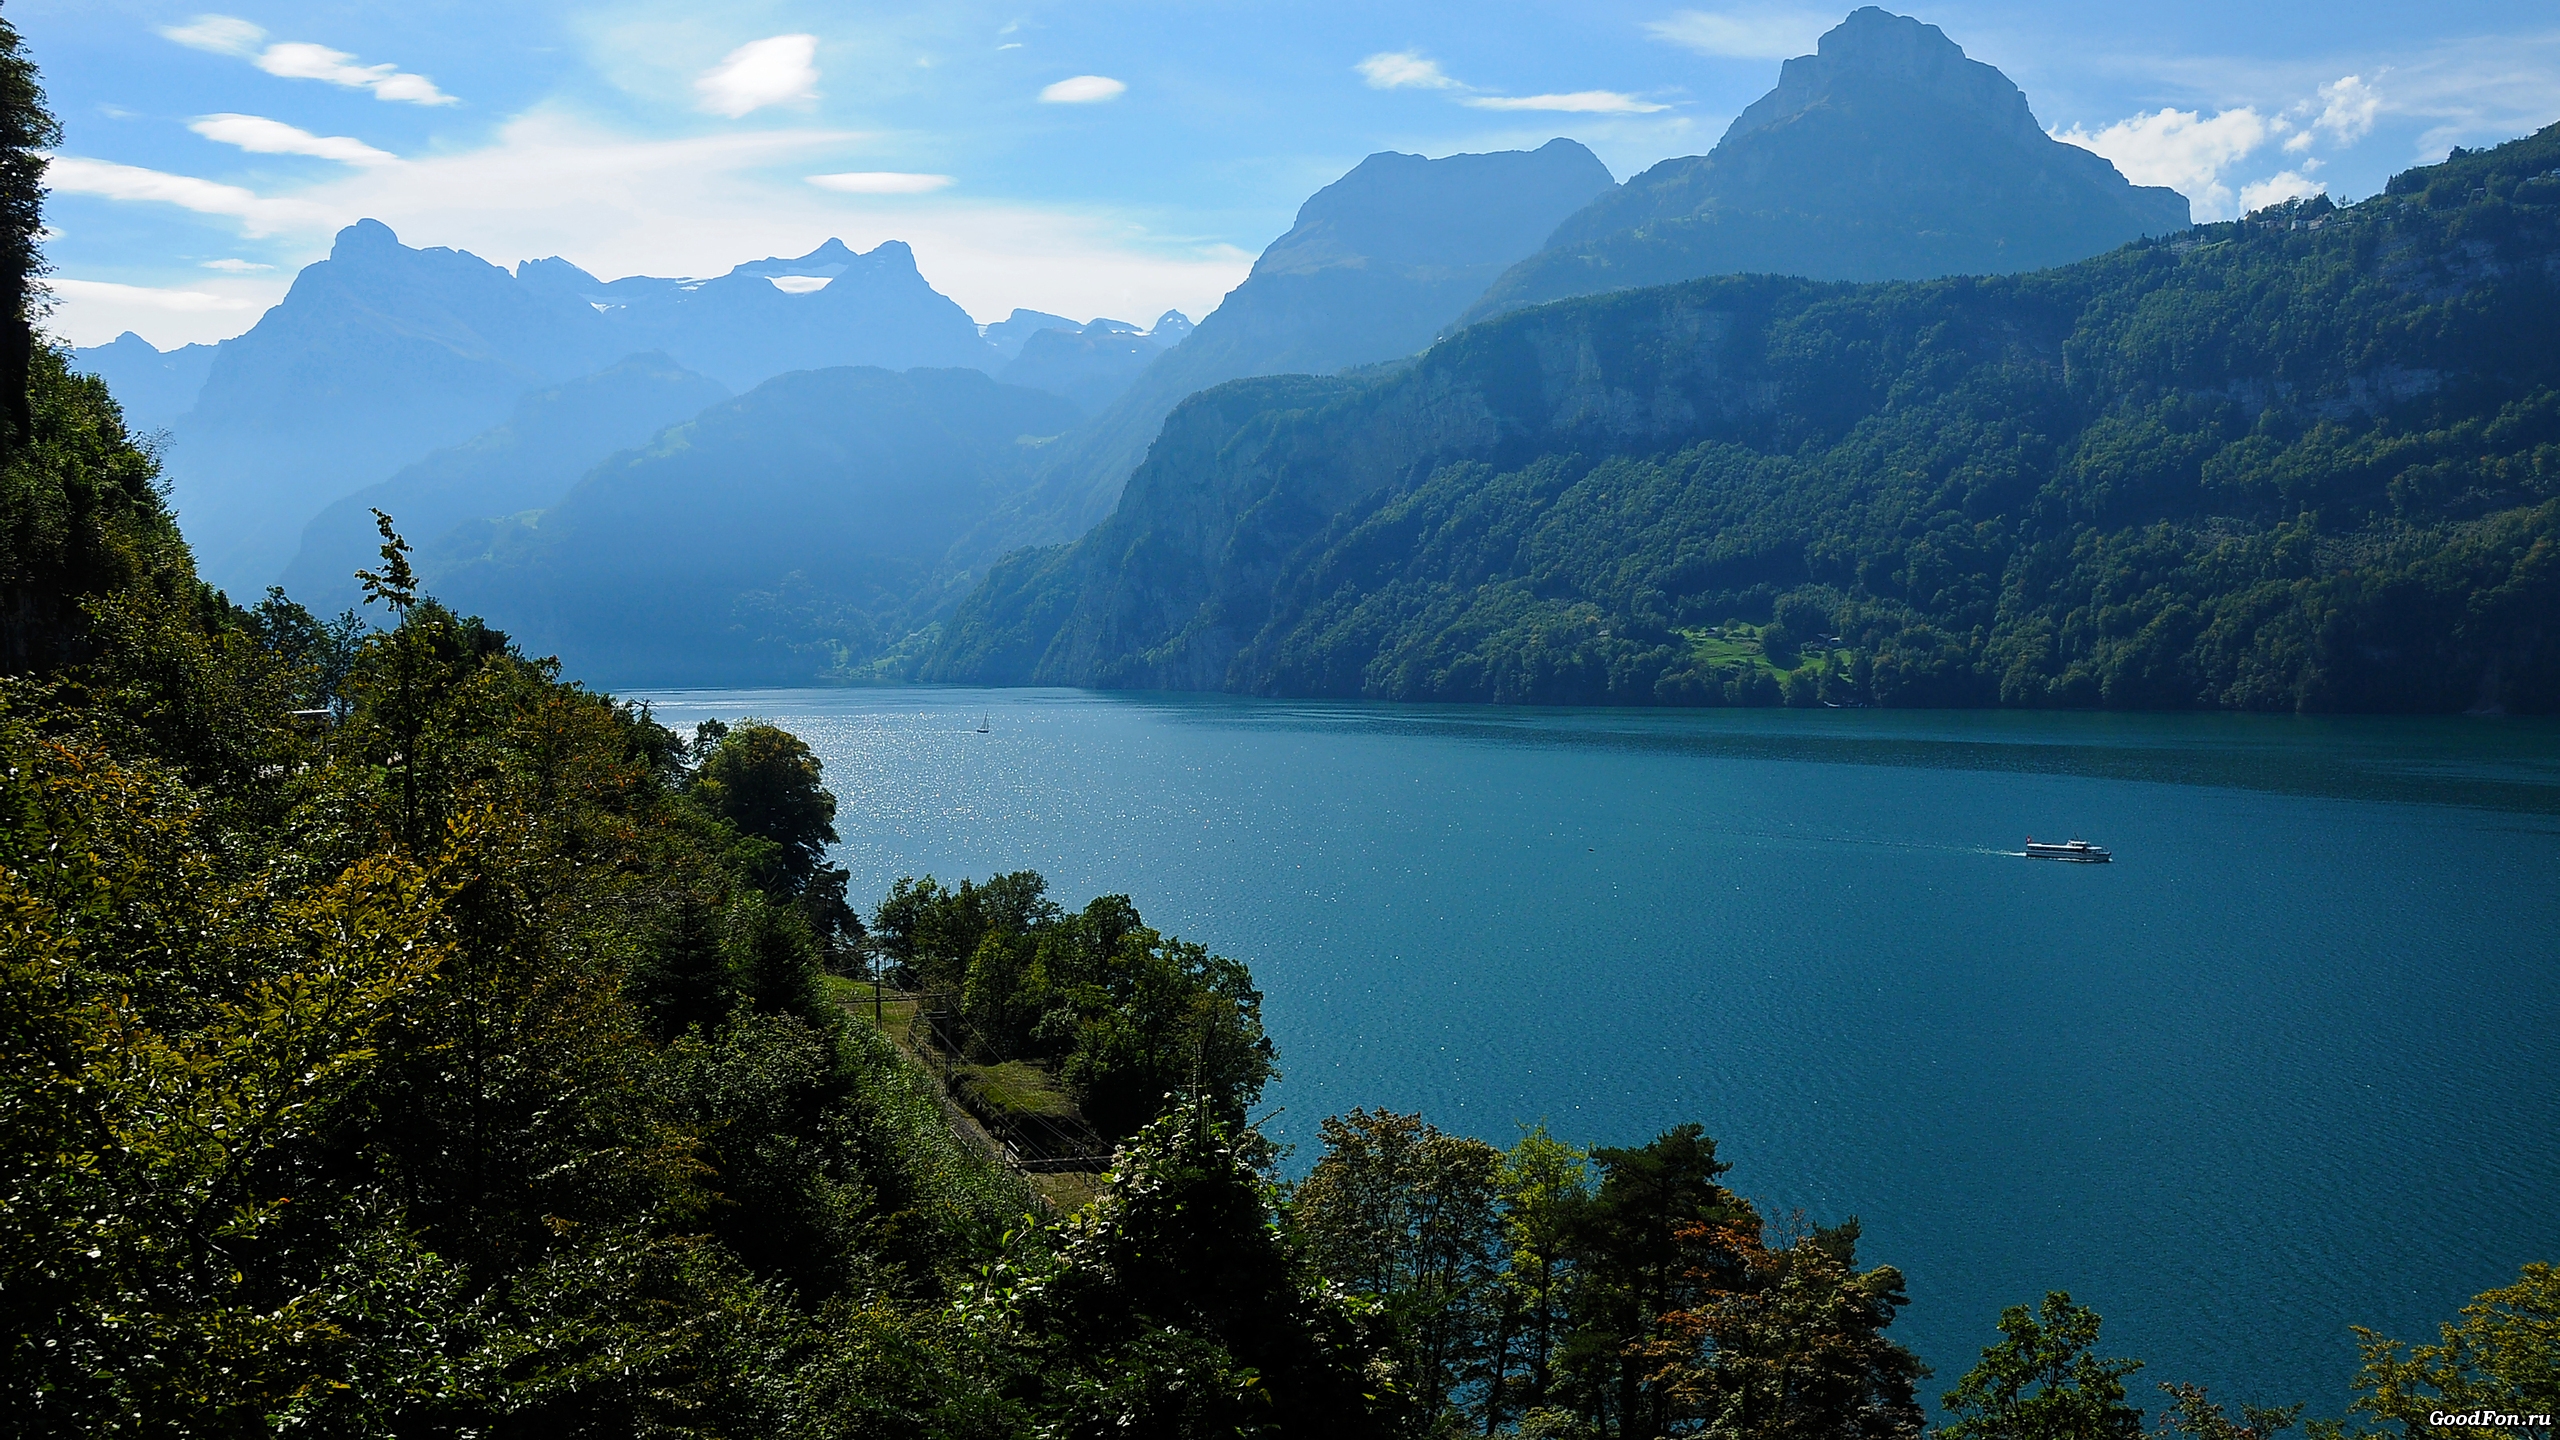 Beautiful Mountain Lake for 2560x1440 HDTV resolution